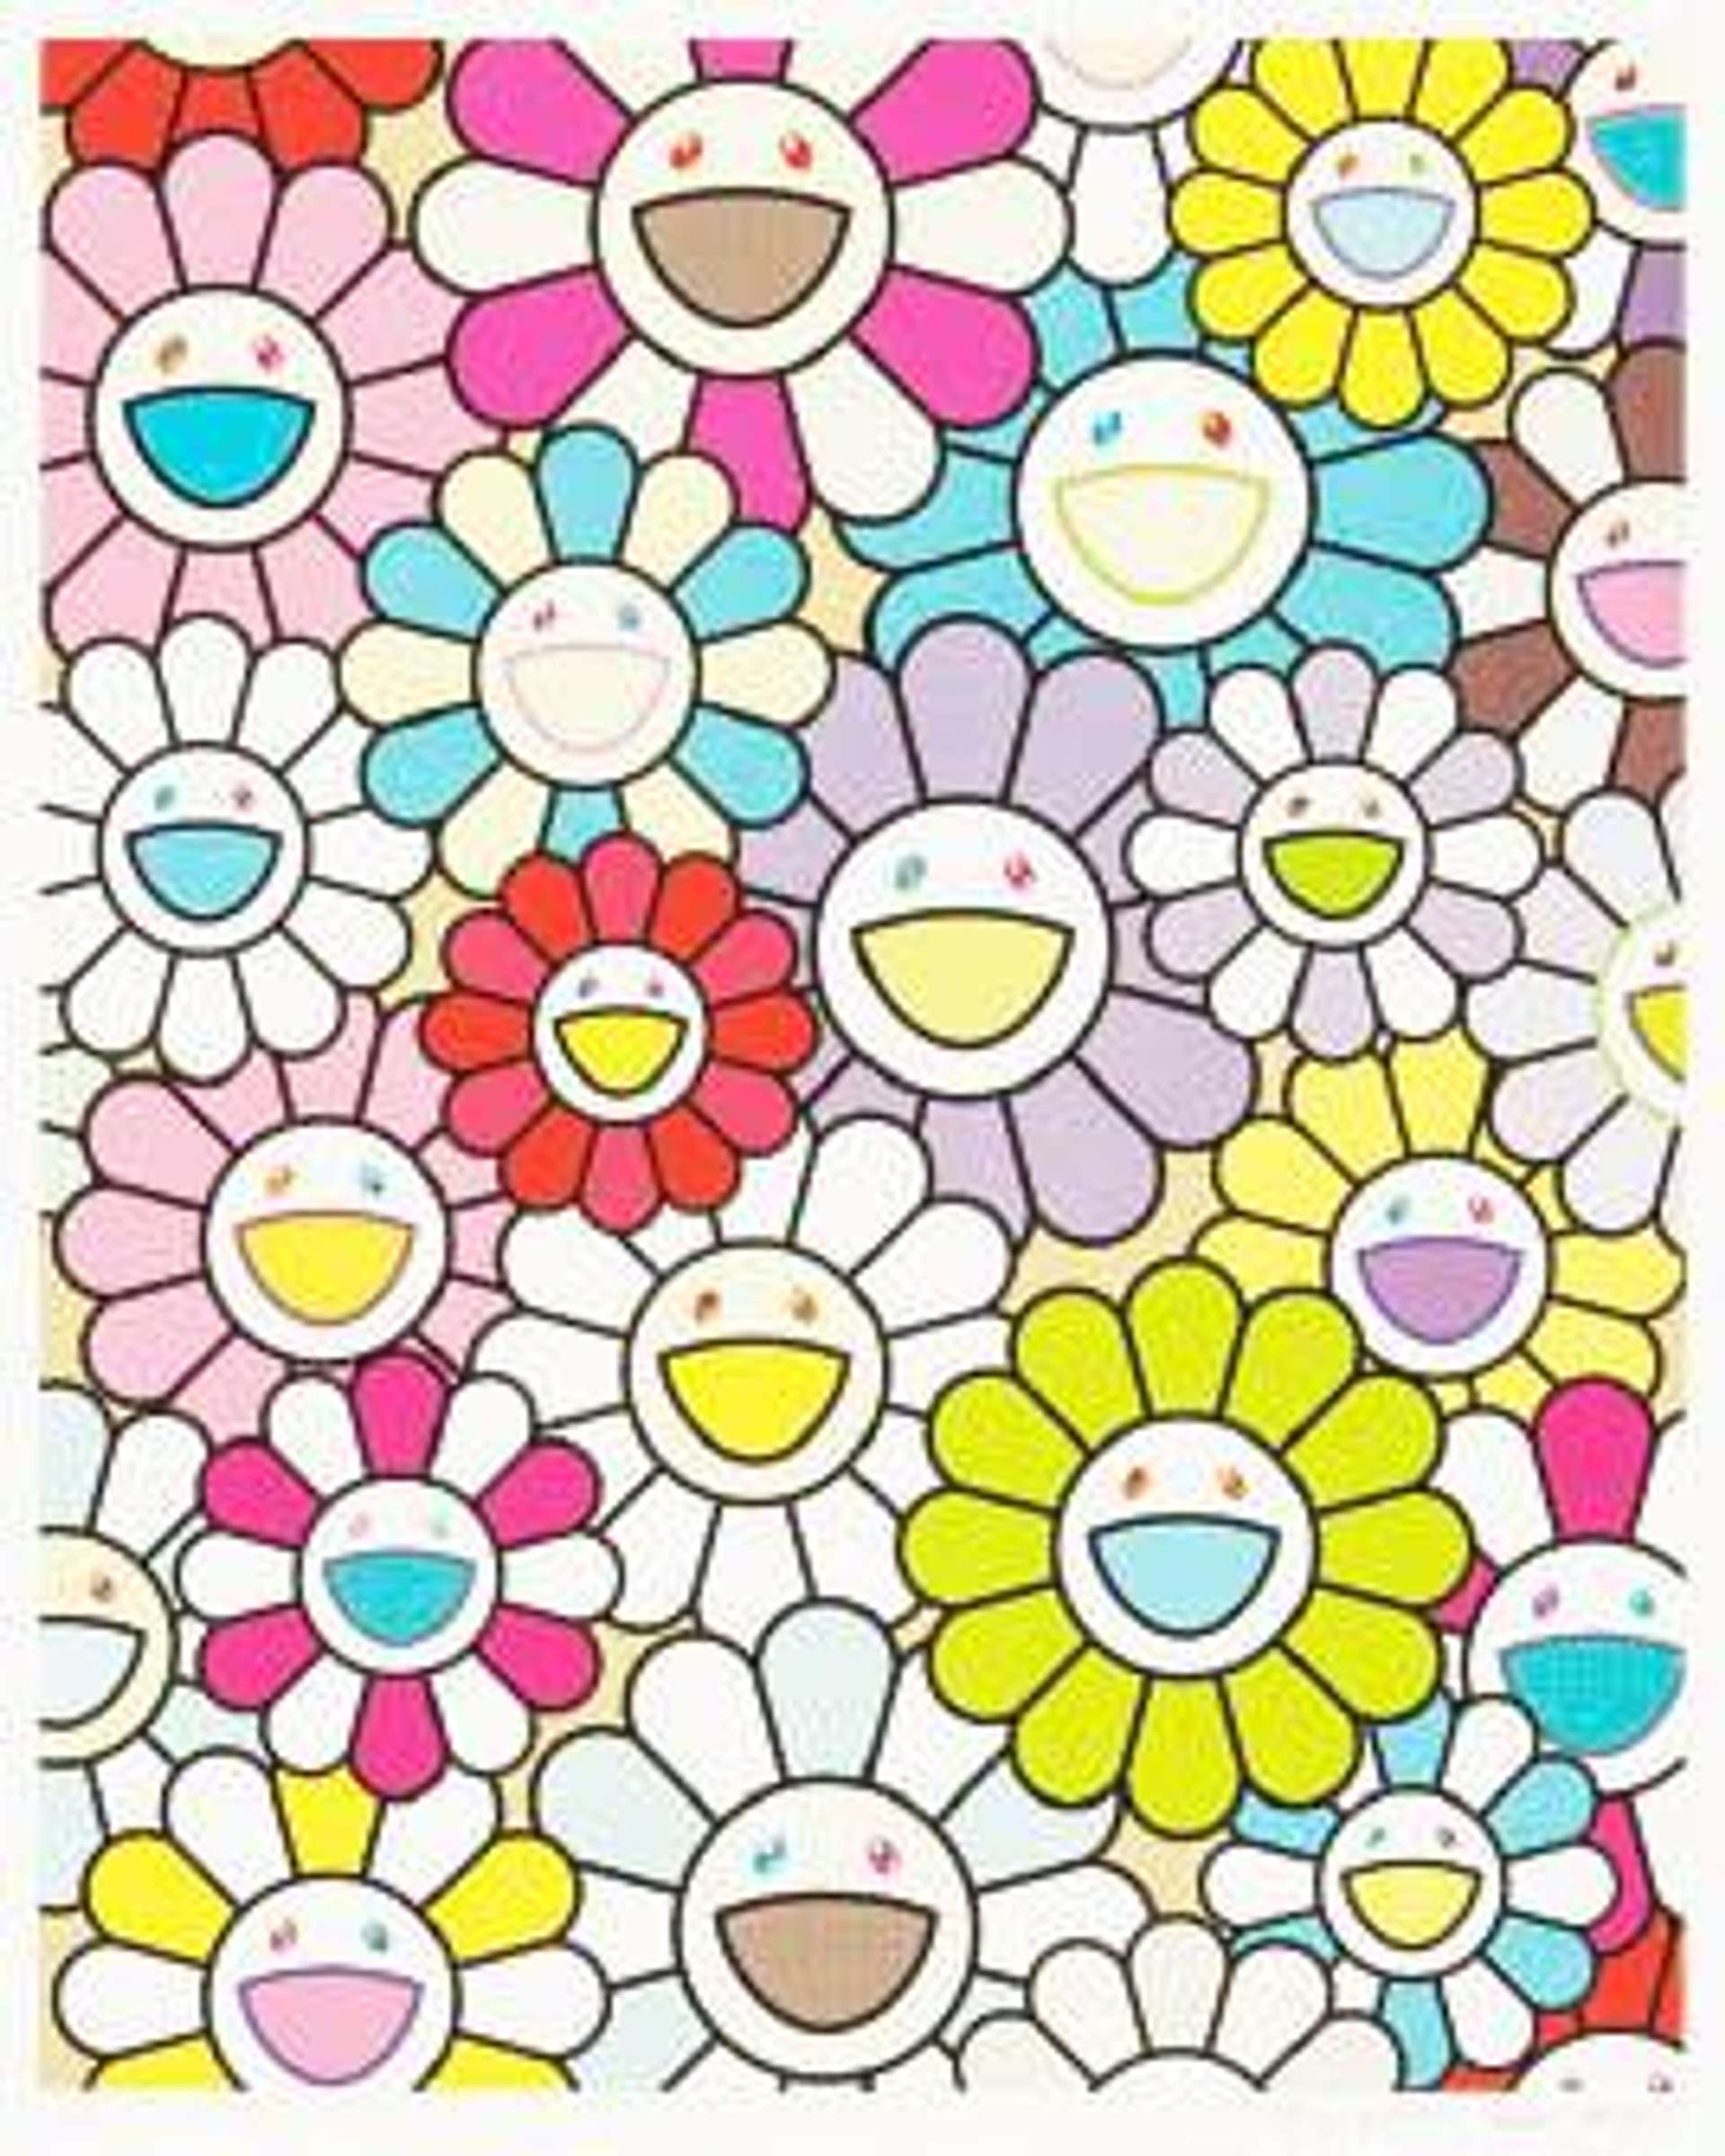 Takashi Murakami: A Little Flower Painting (yellow, white and purple flowers) - Signed Print